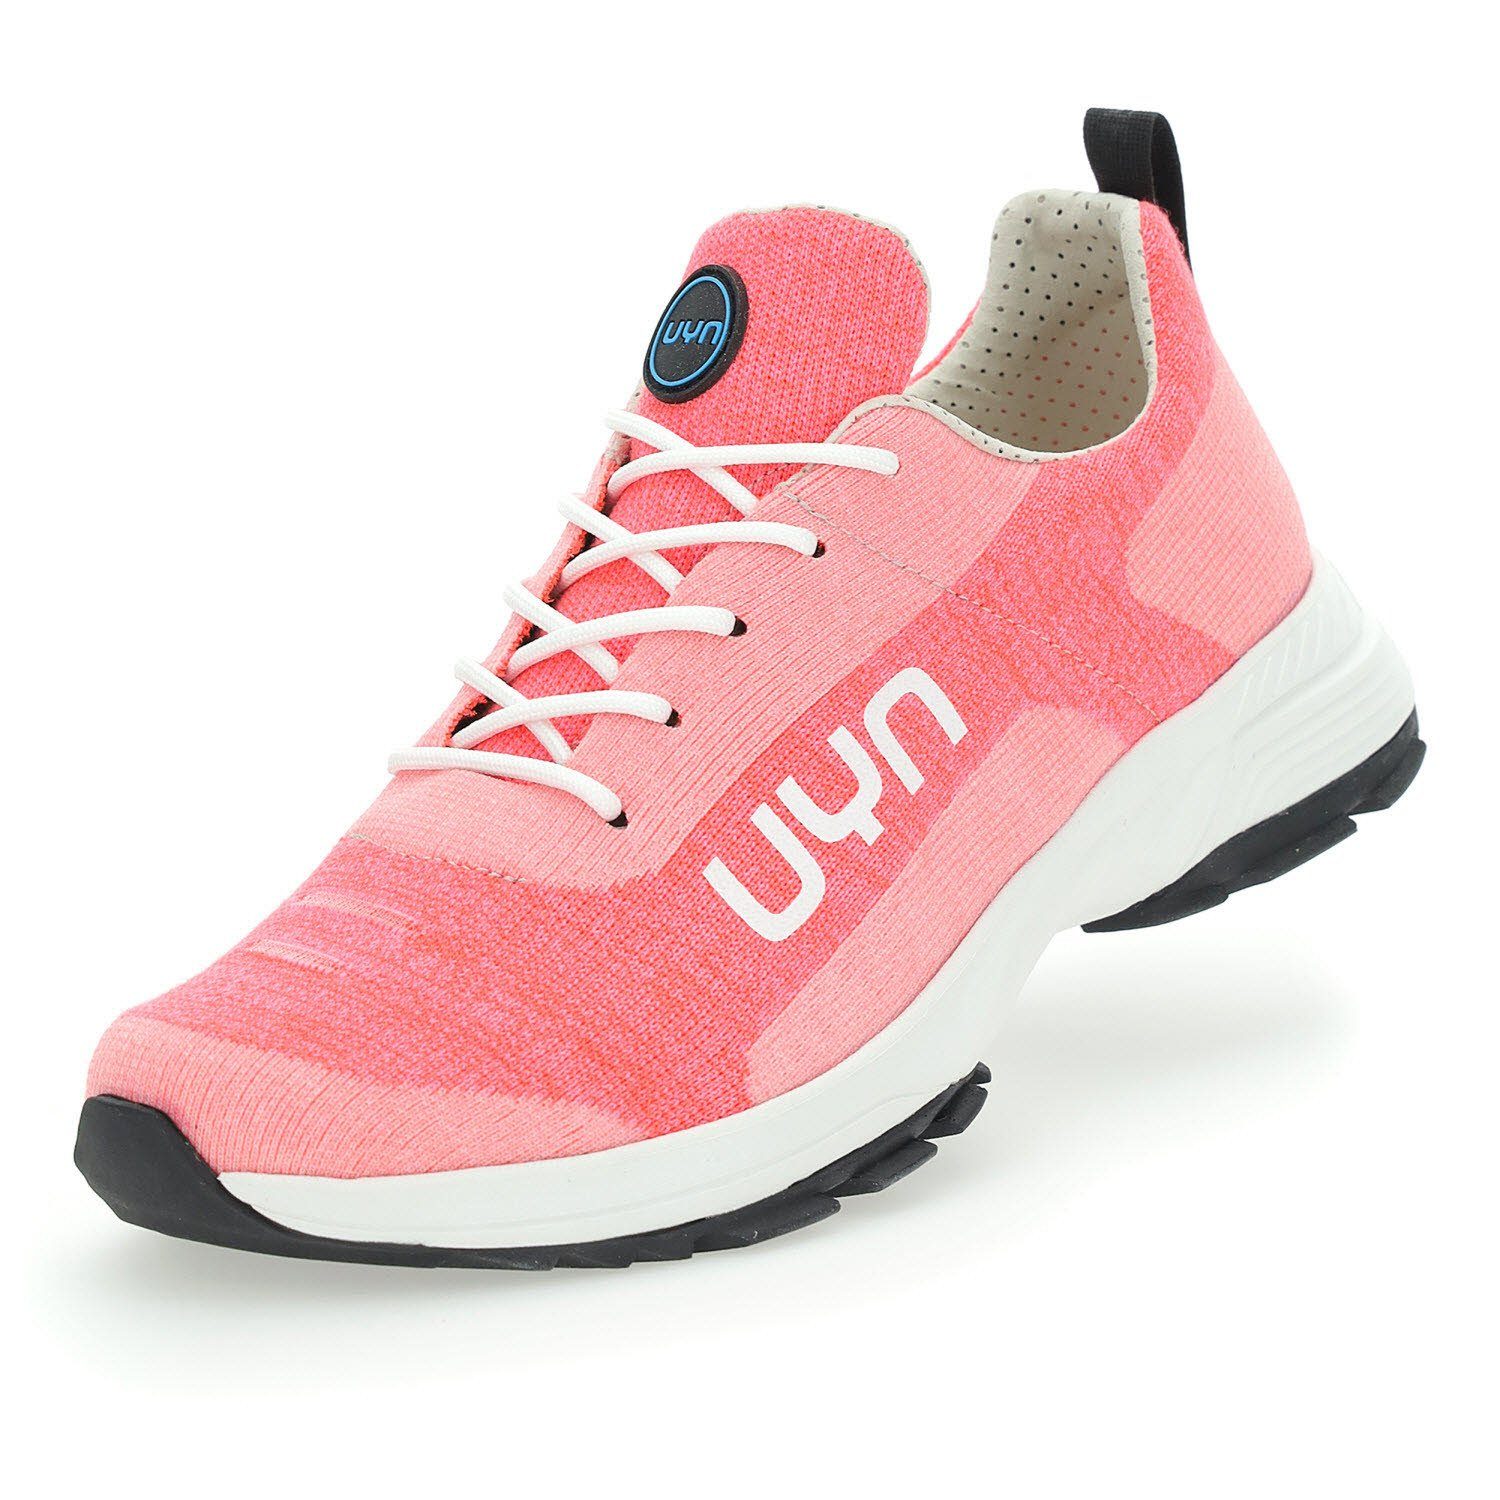 UYN UYN Air Dual XC Schuhe Damen Sneaker, pink online kaufen | OTTO